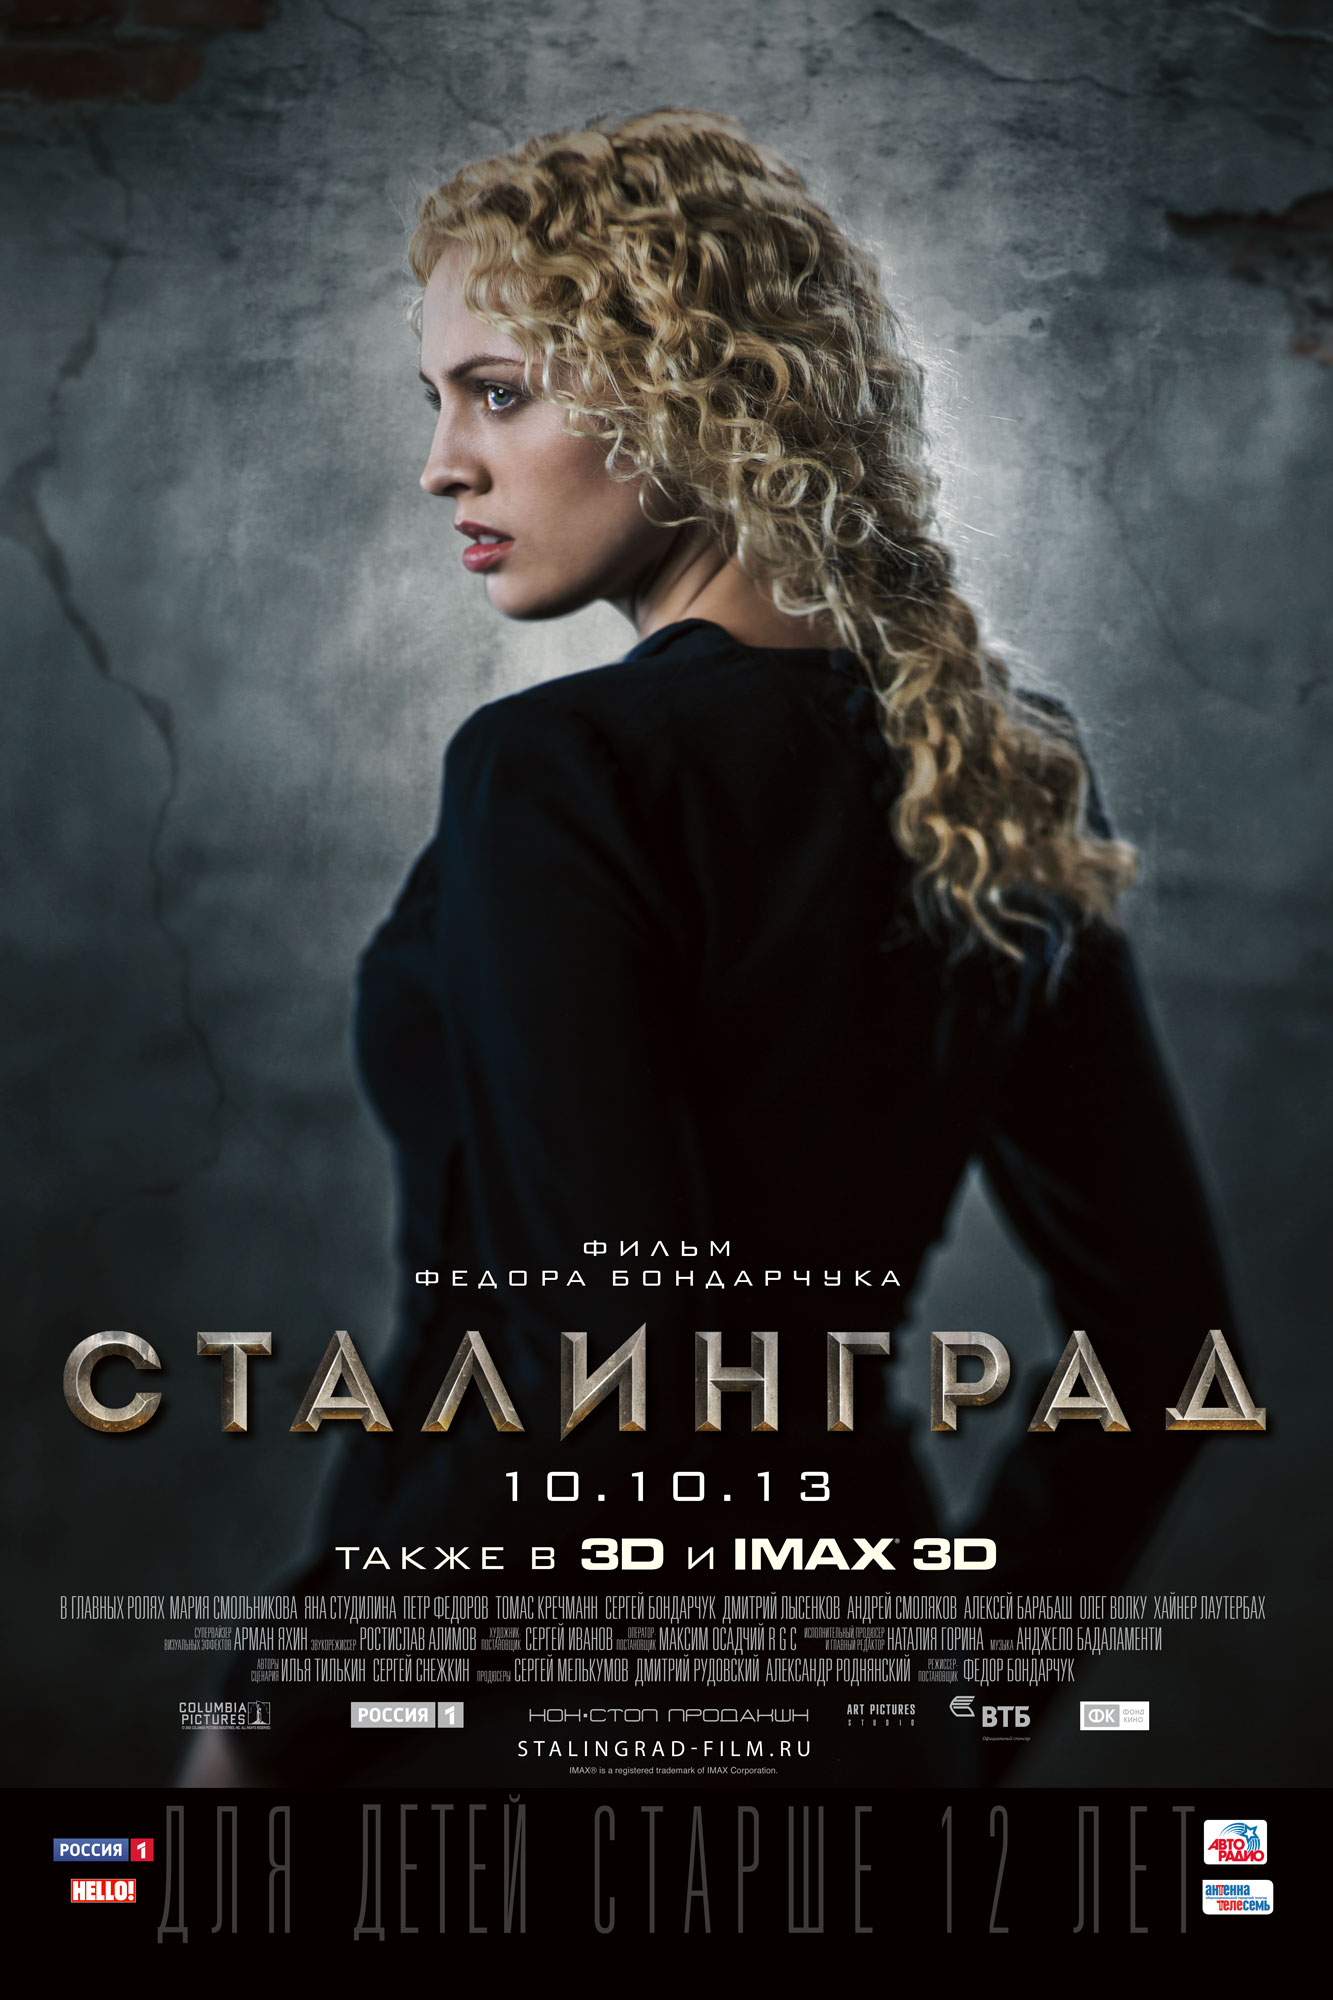 Poster of Stalingrad